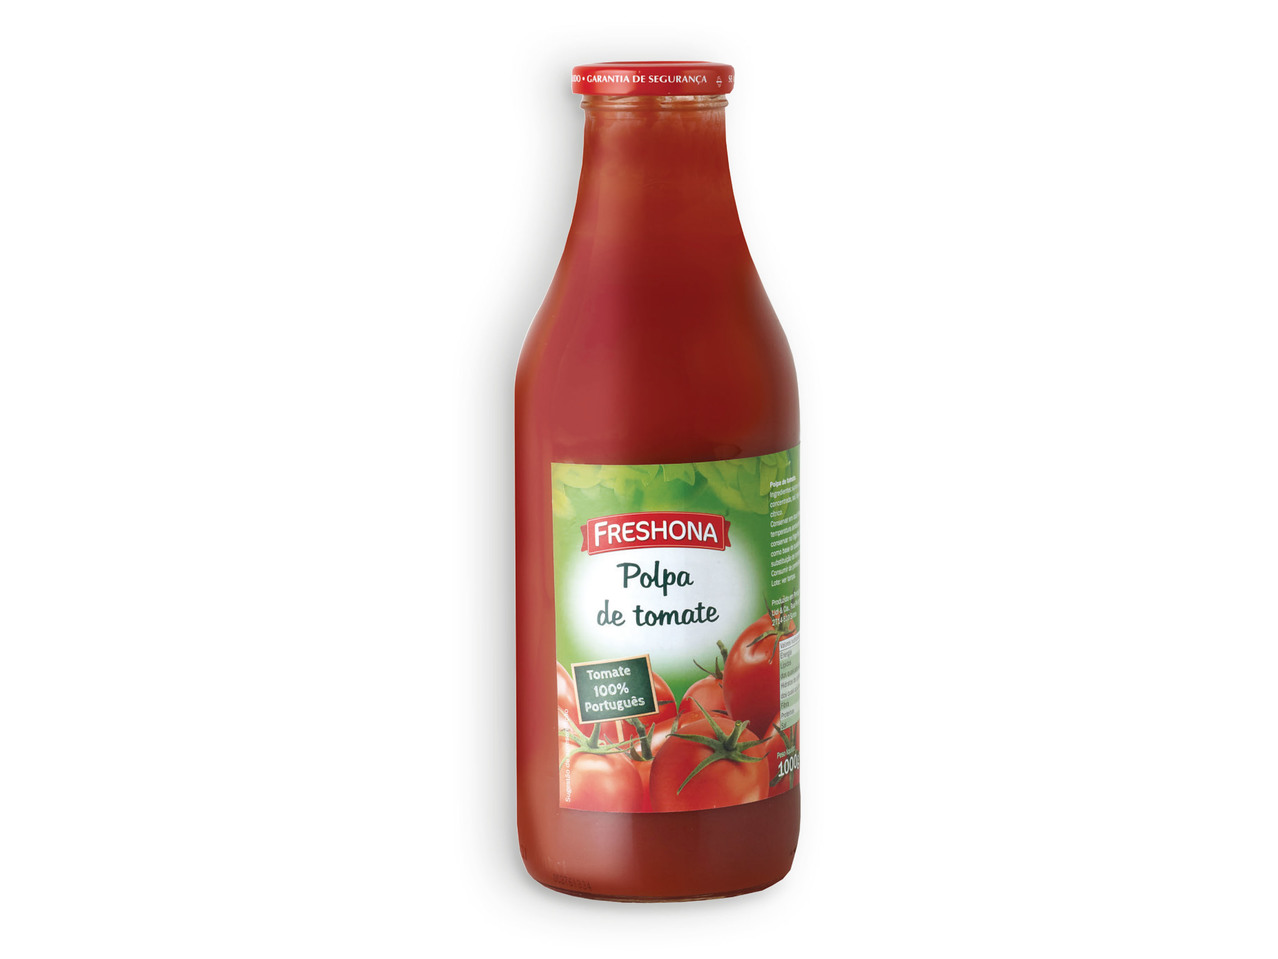 FRESHONA(R) Polpa de Tomate